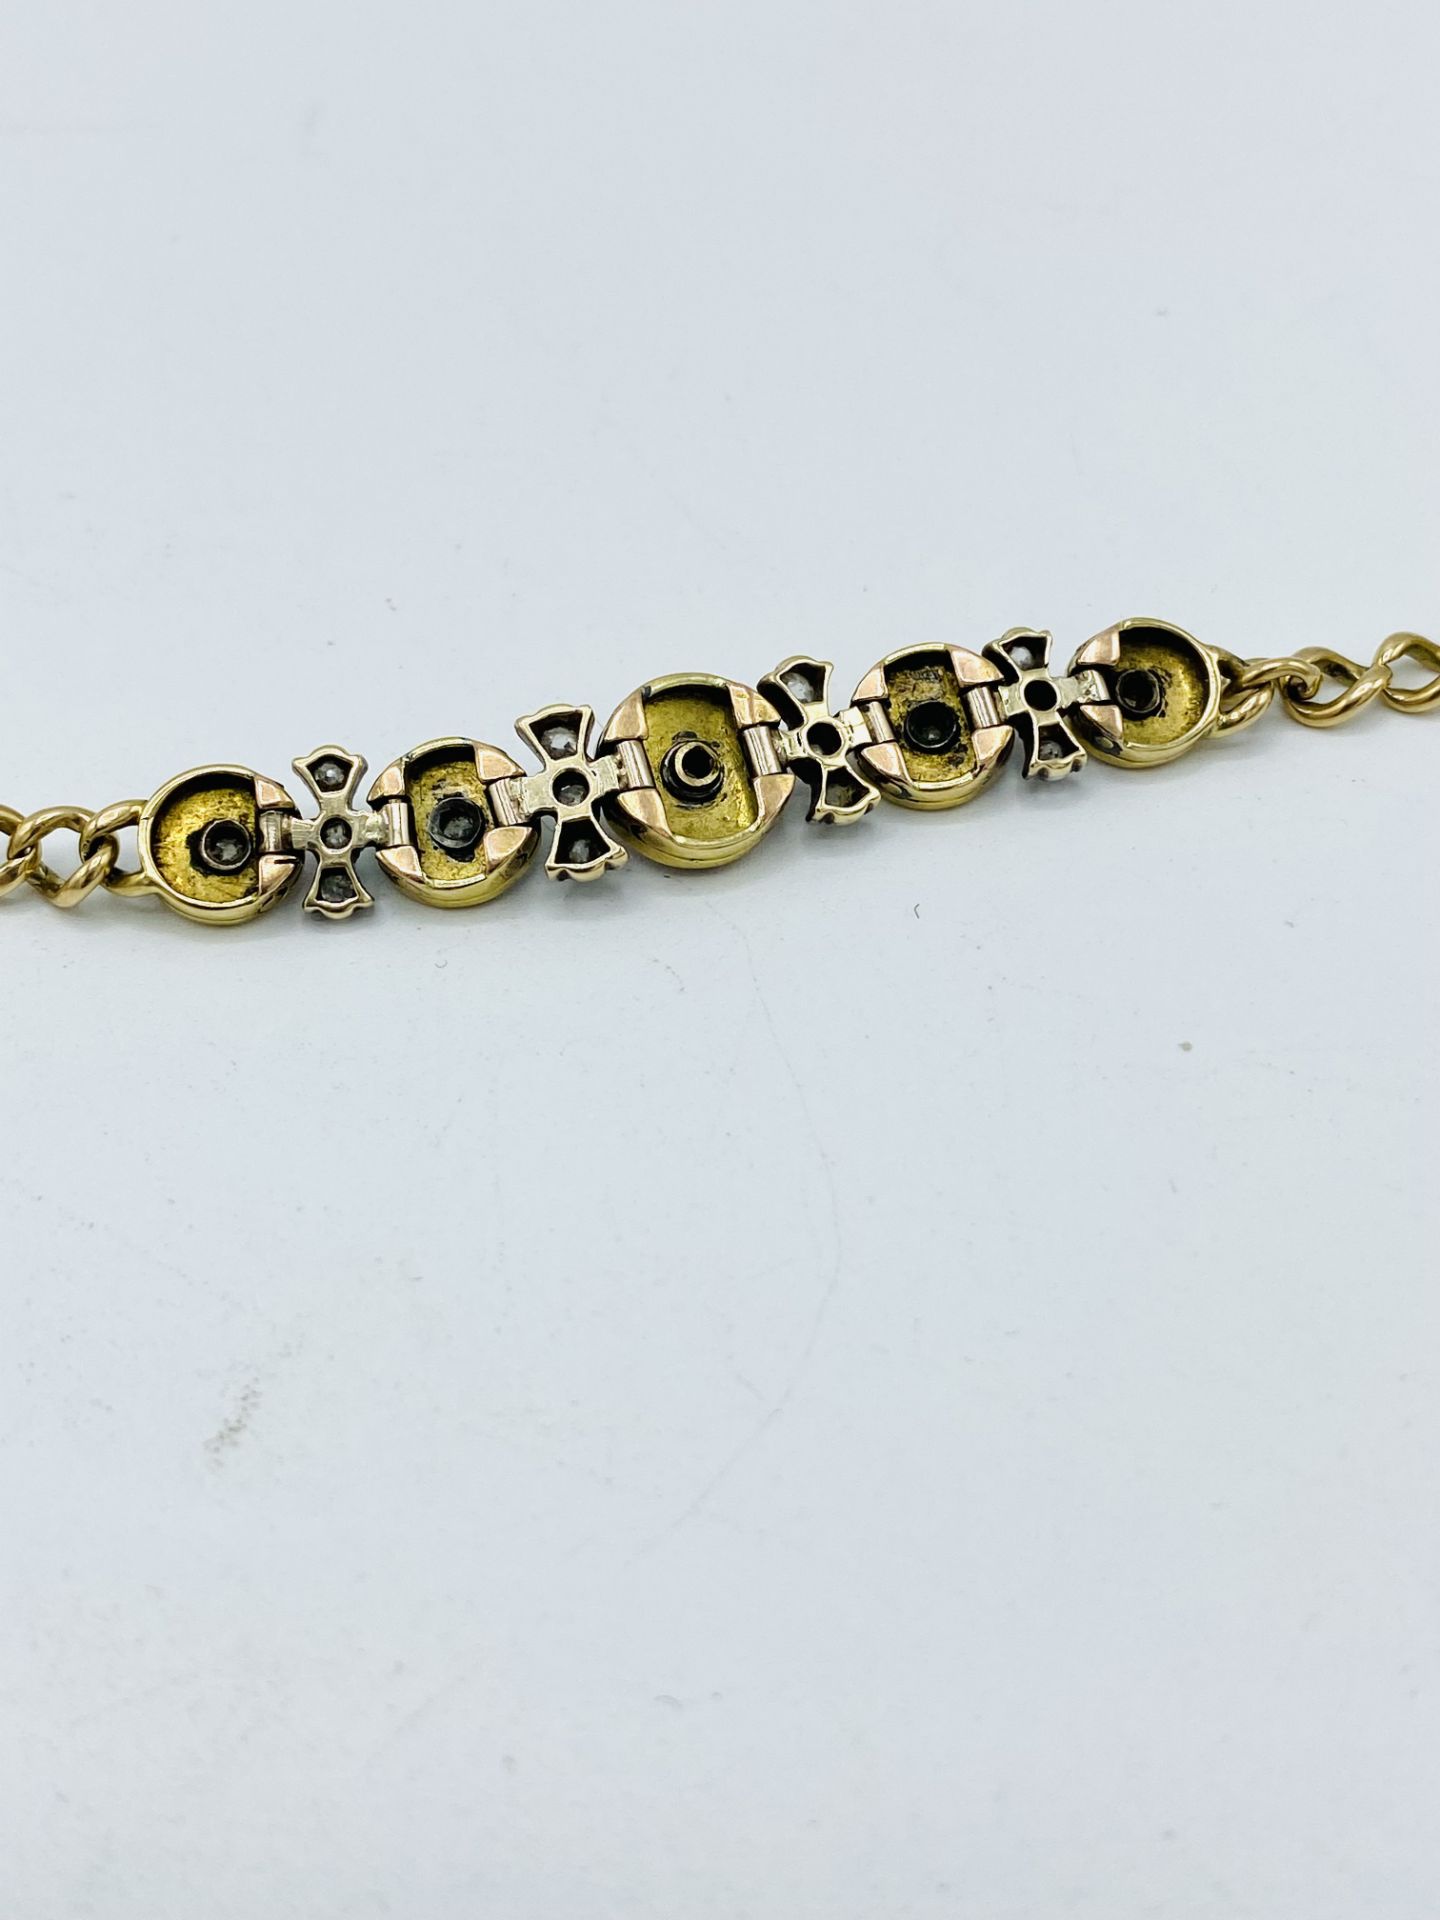 18ct gold bracelet with enamel flowers set with diamonds - Image 6 of 7